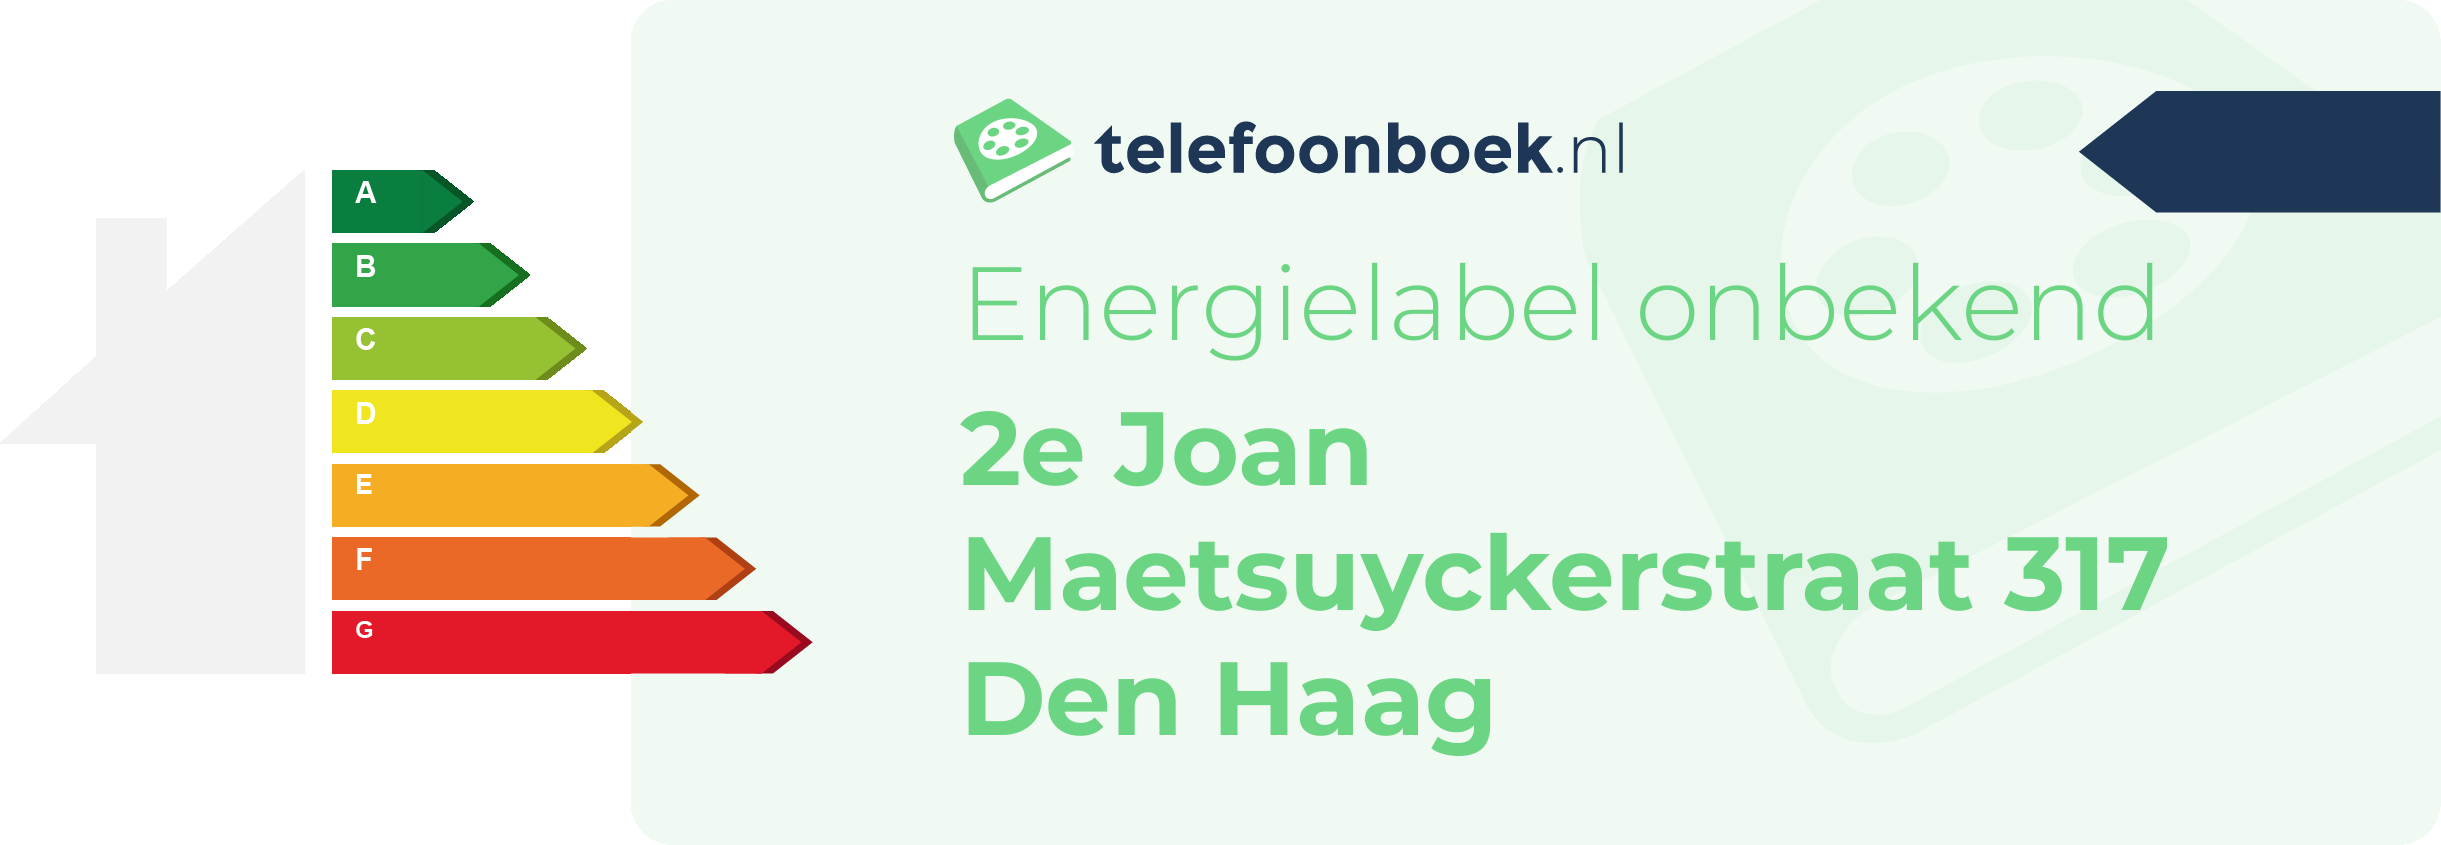 Energielabel 2e Joan Maetsuyckerstraat 317 Den Haag